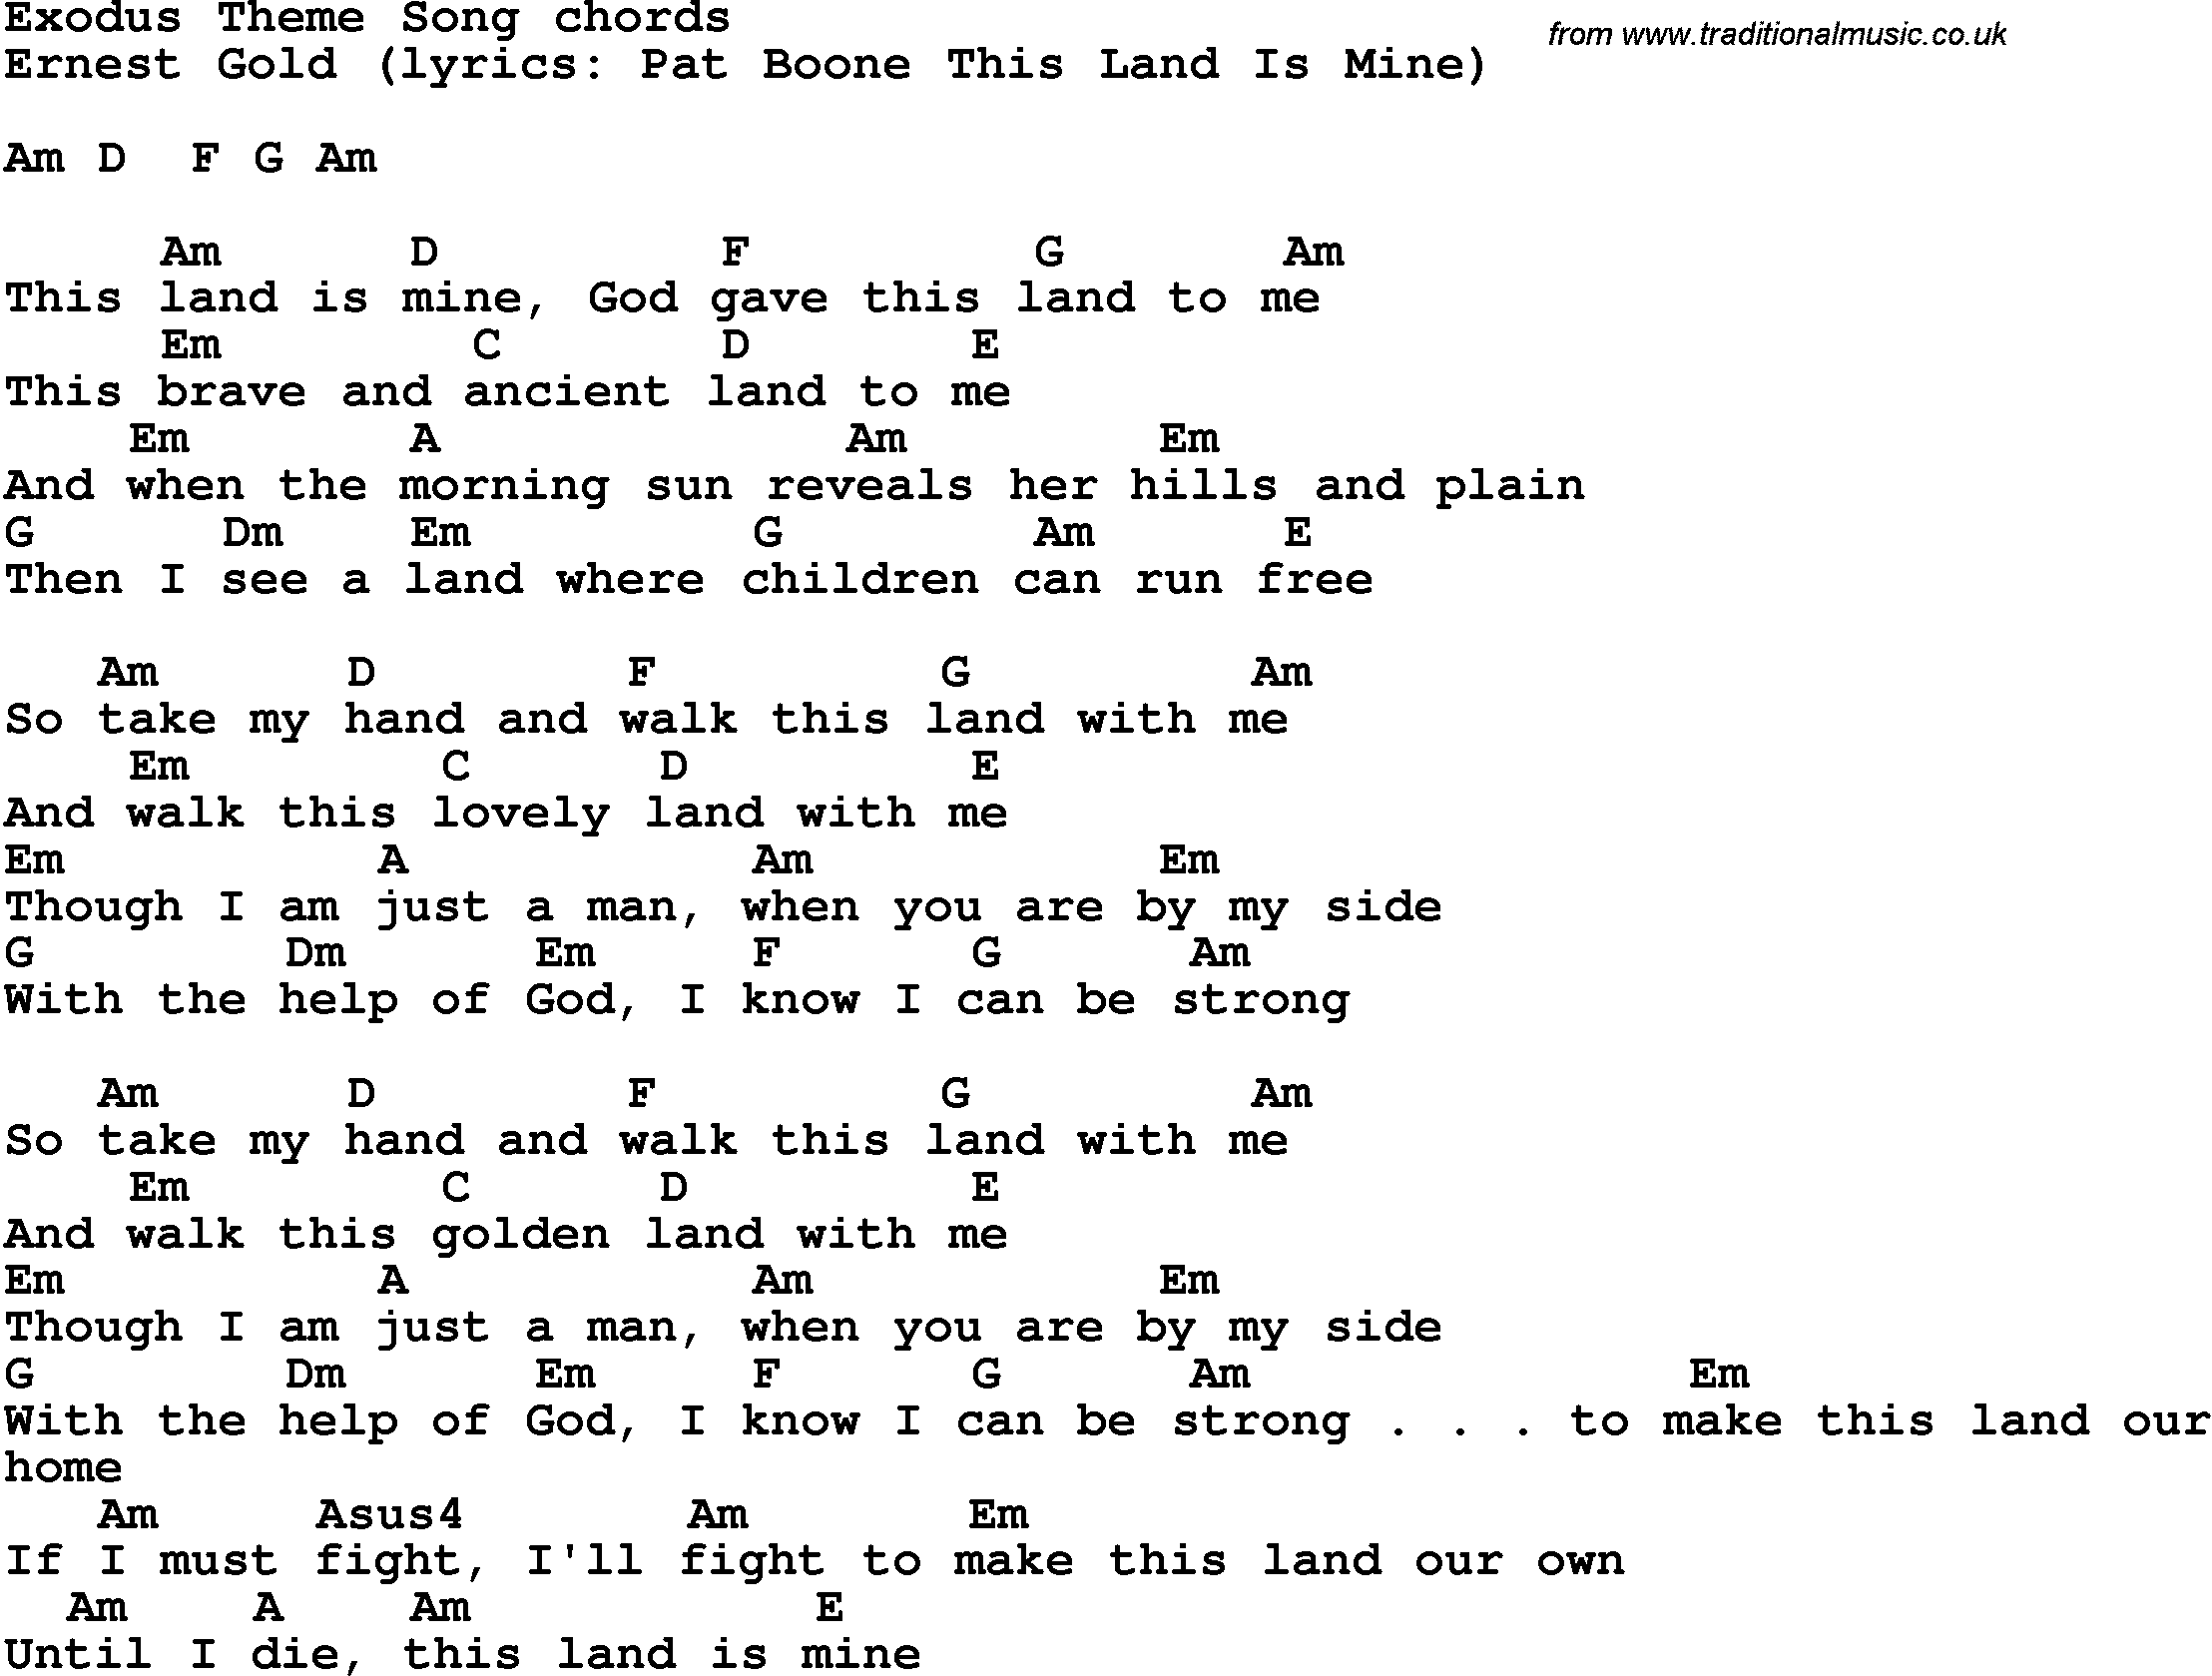 Team america theme song lyrics